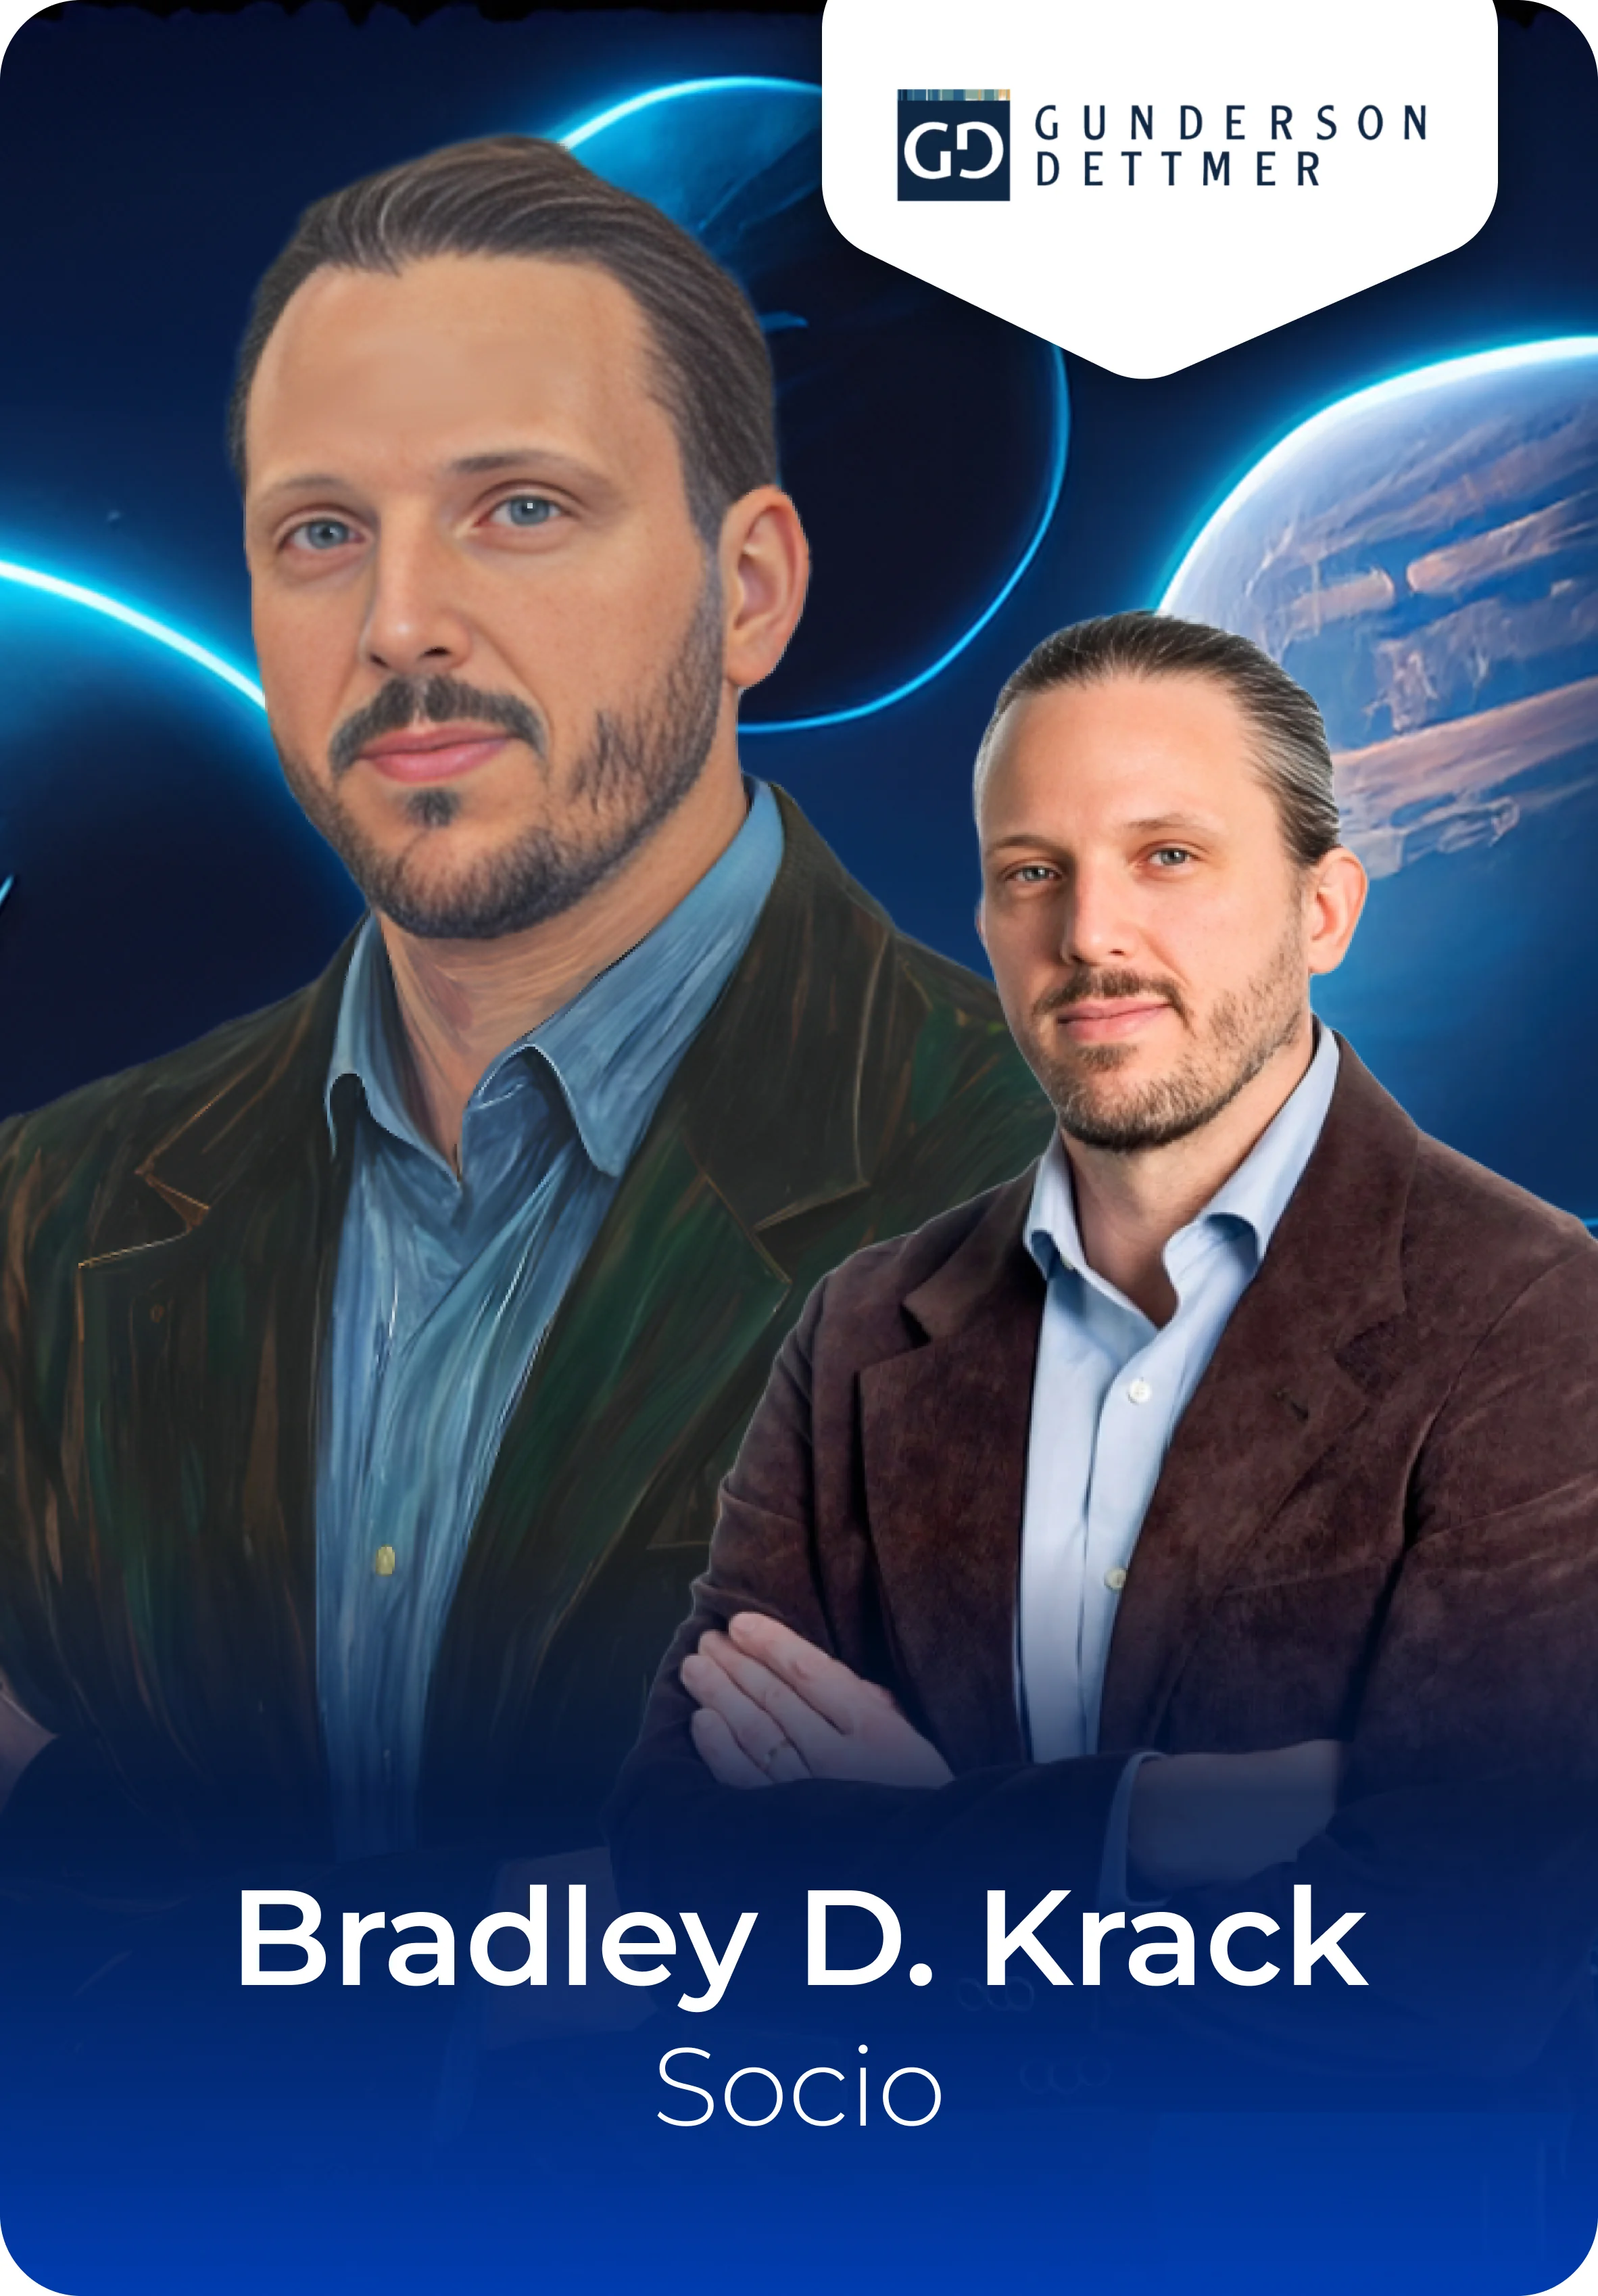 Bradley D. Krack